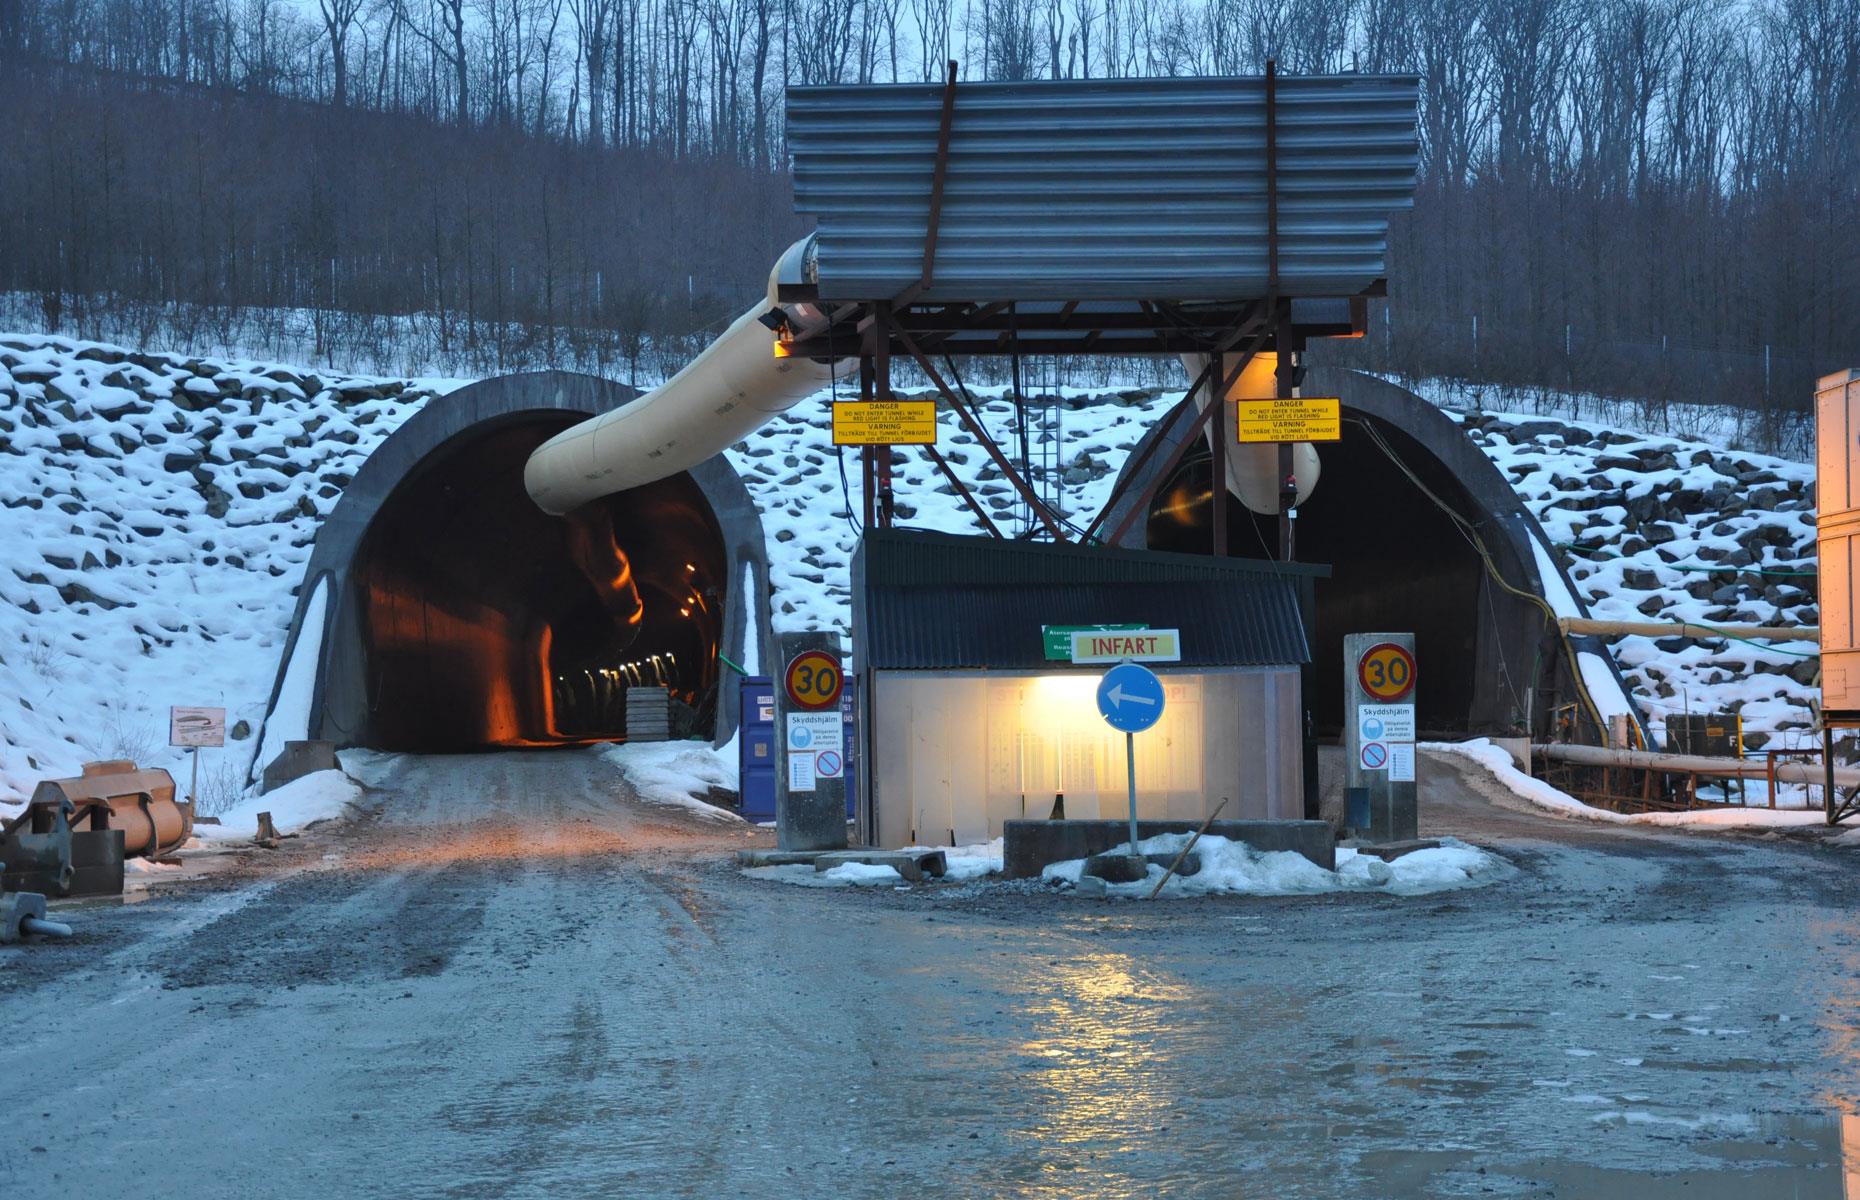 Hallandsås Rail Tunnel, Sweden